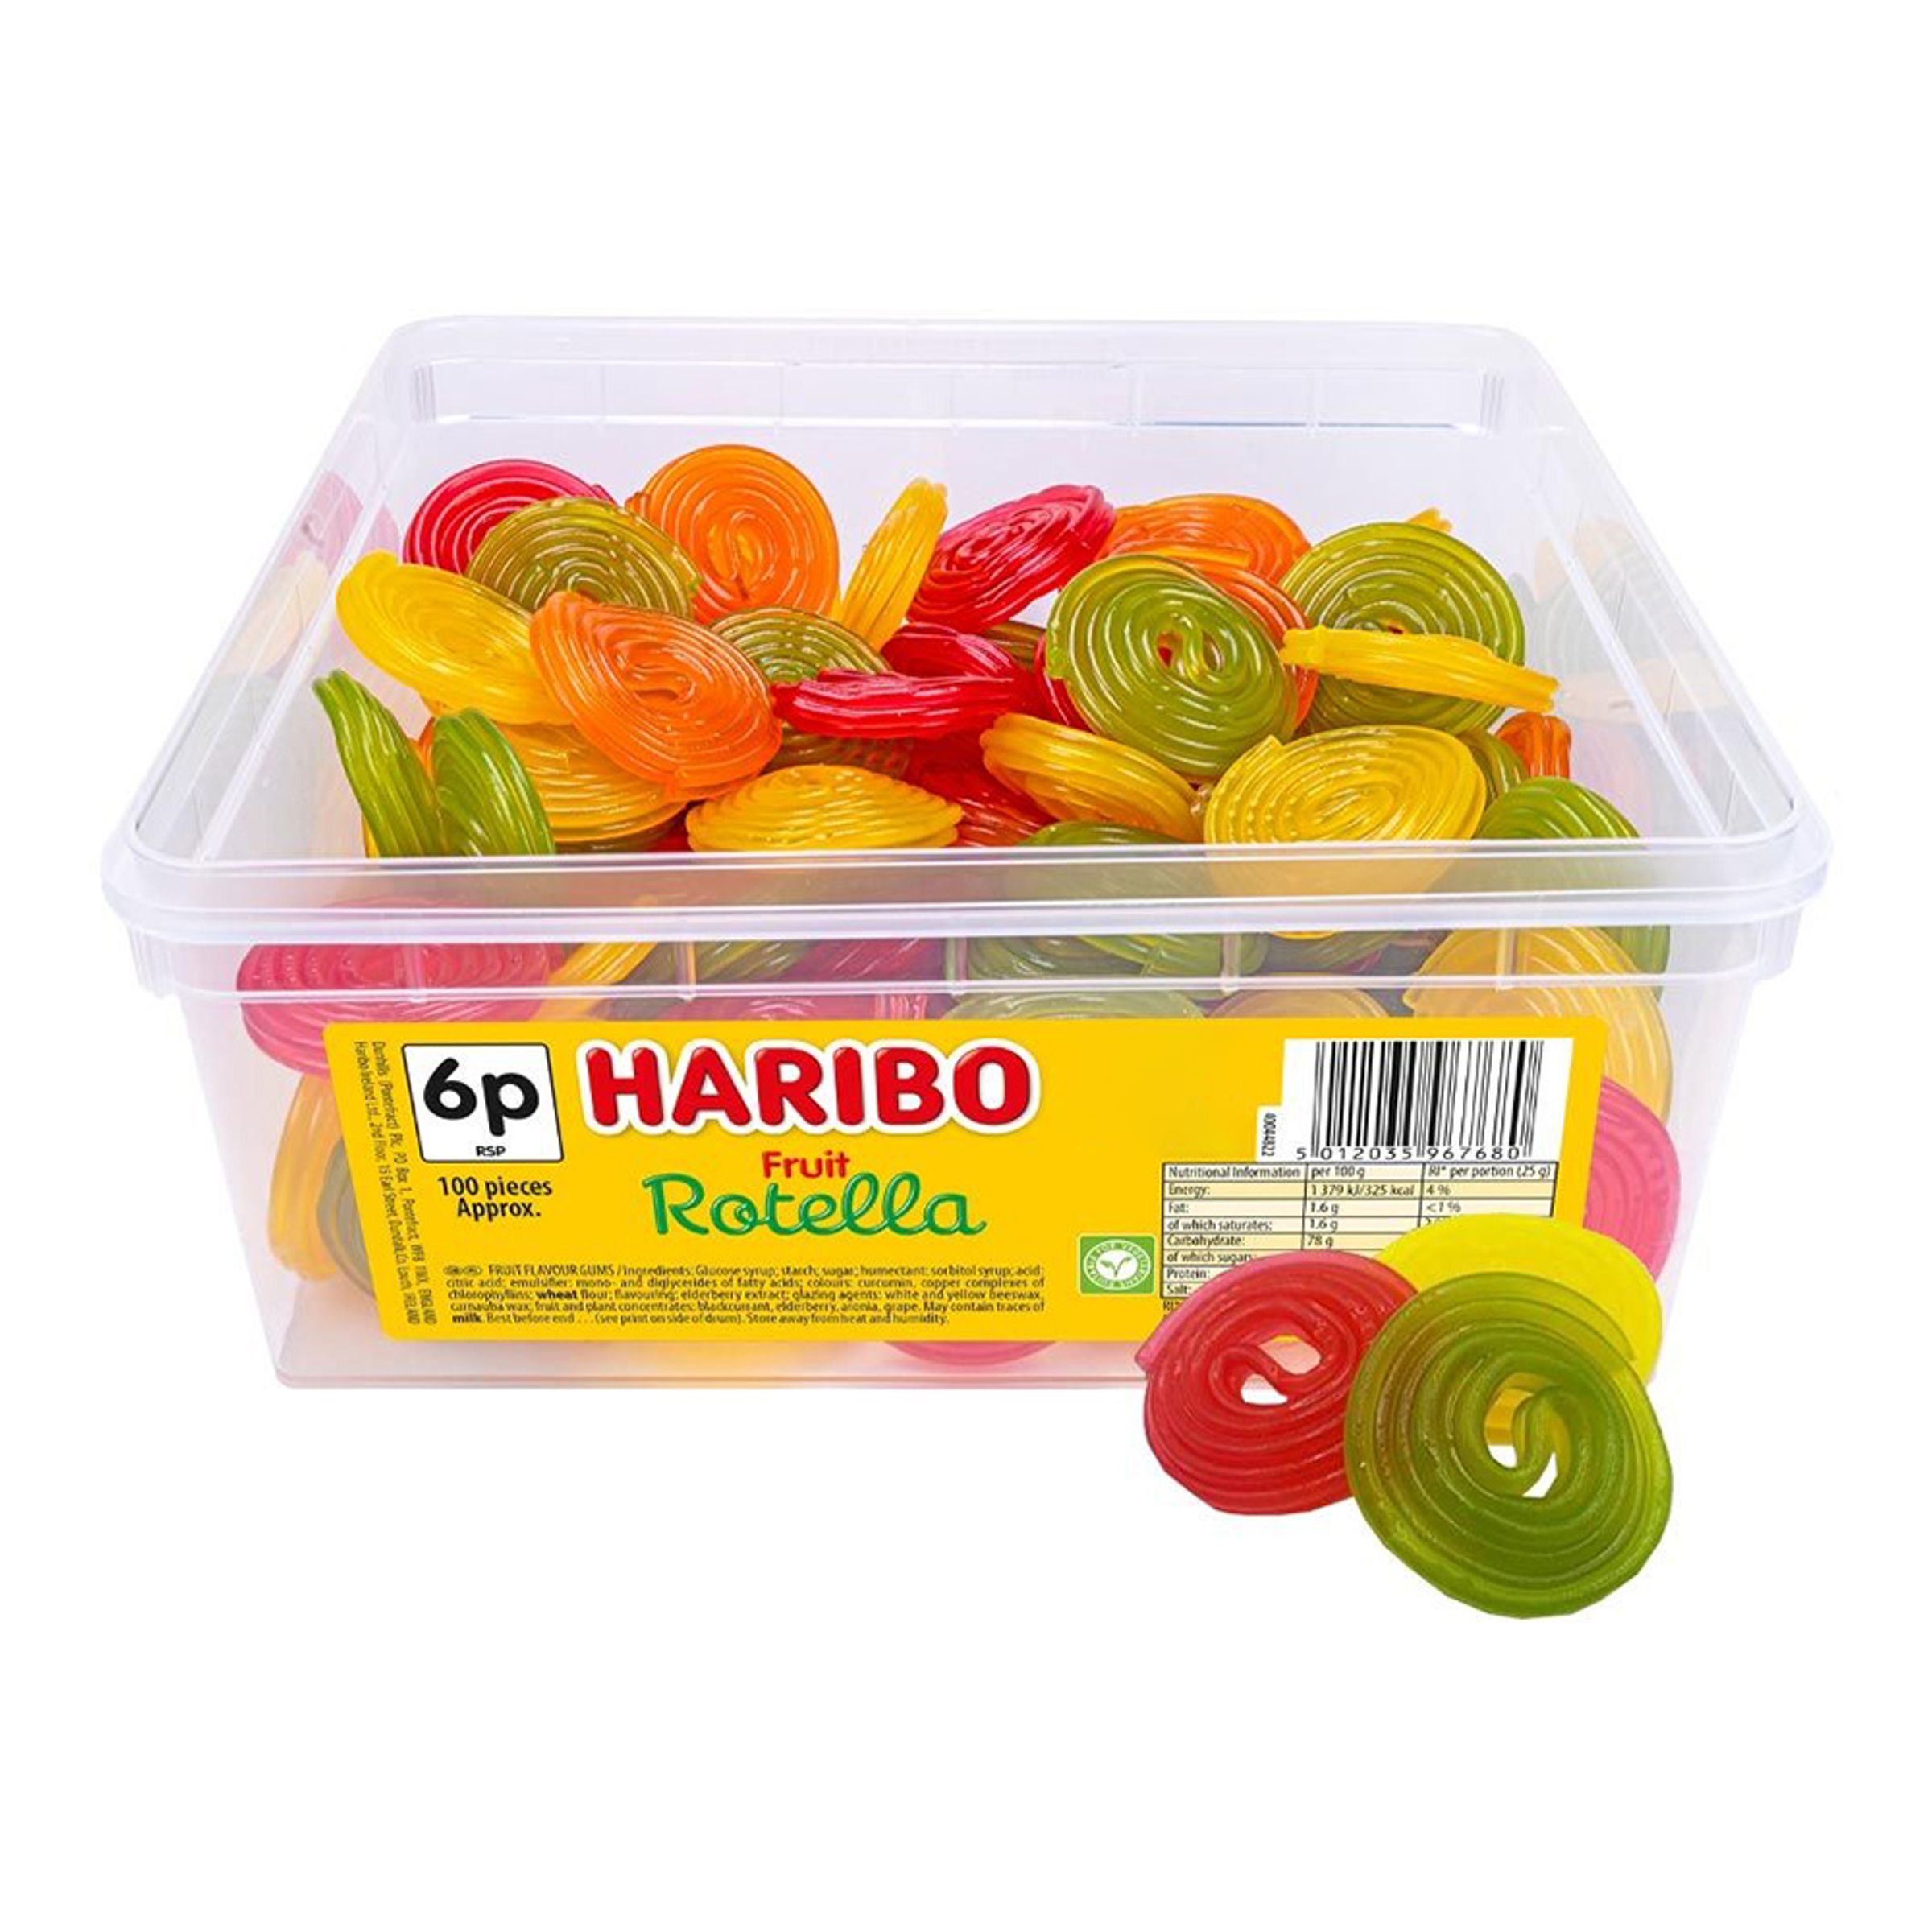 Haribo Rotella Fruit Storpack - 1,92 kg